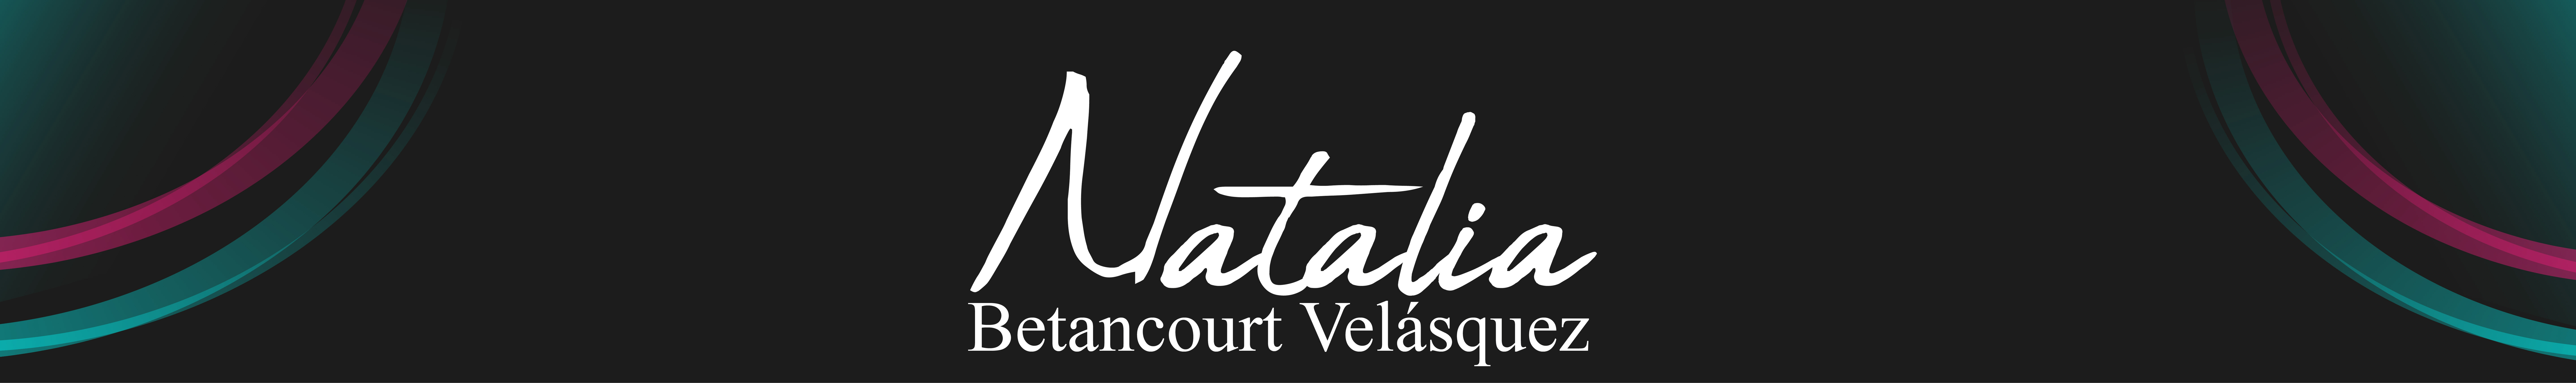 Natalia Betancourt Velásquez's profile banner